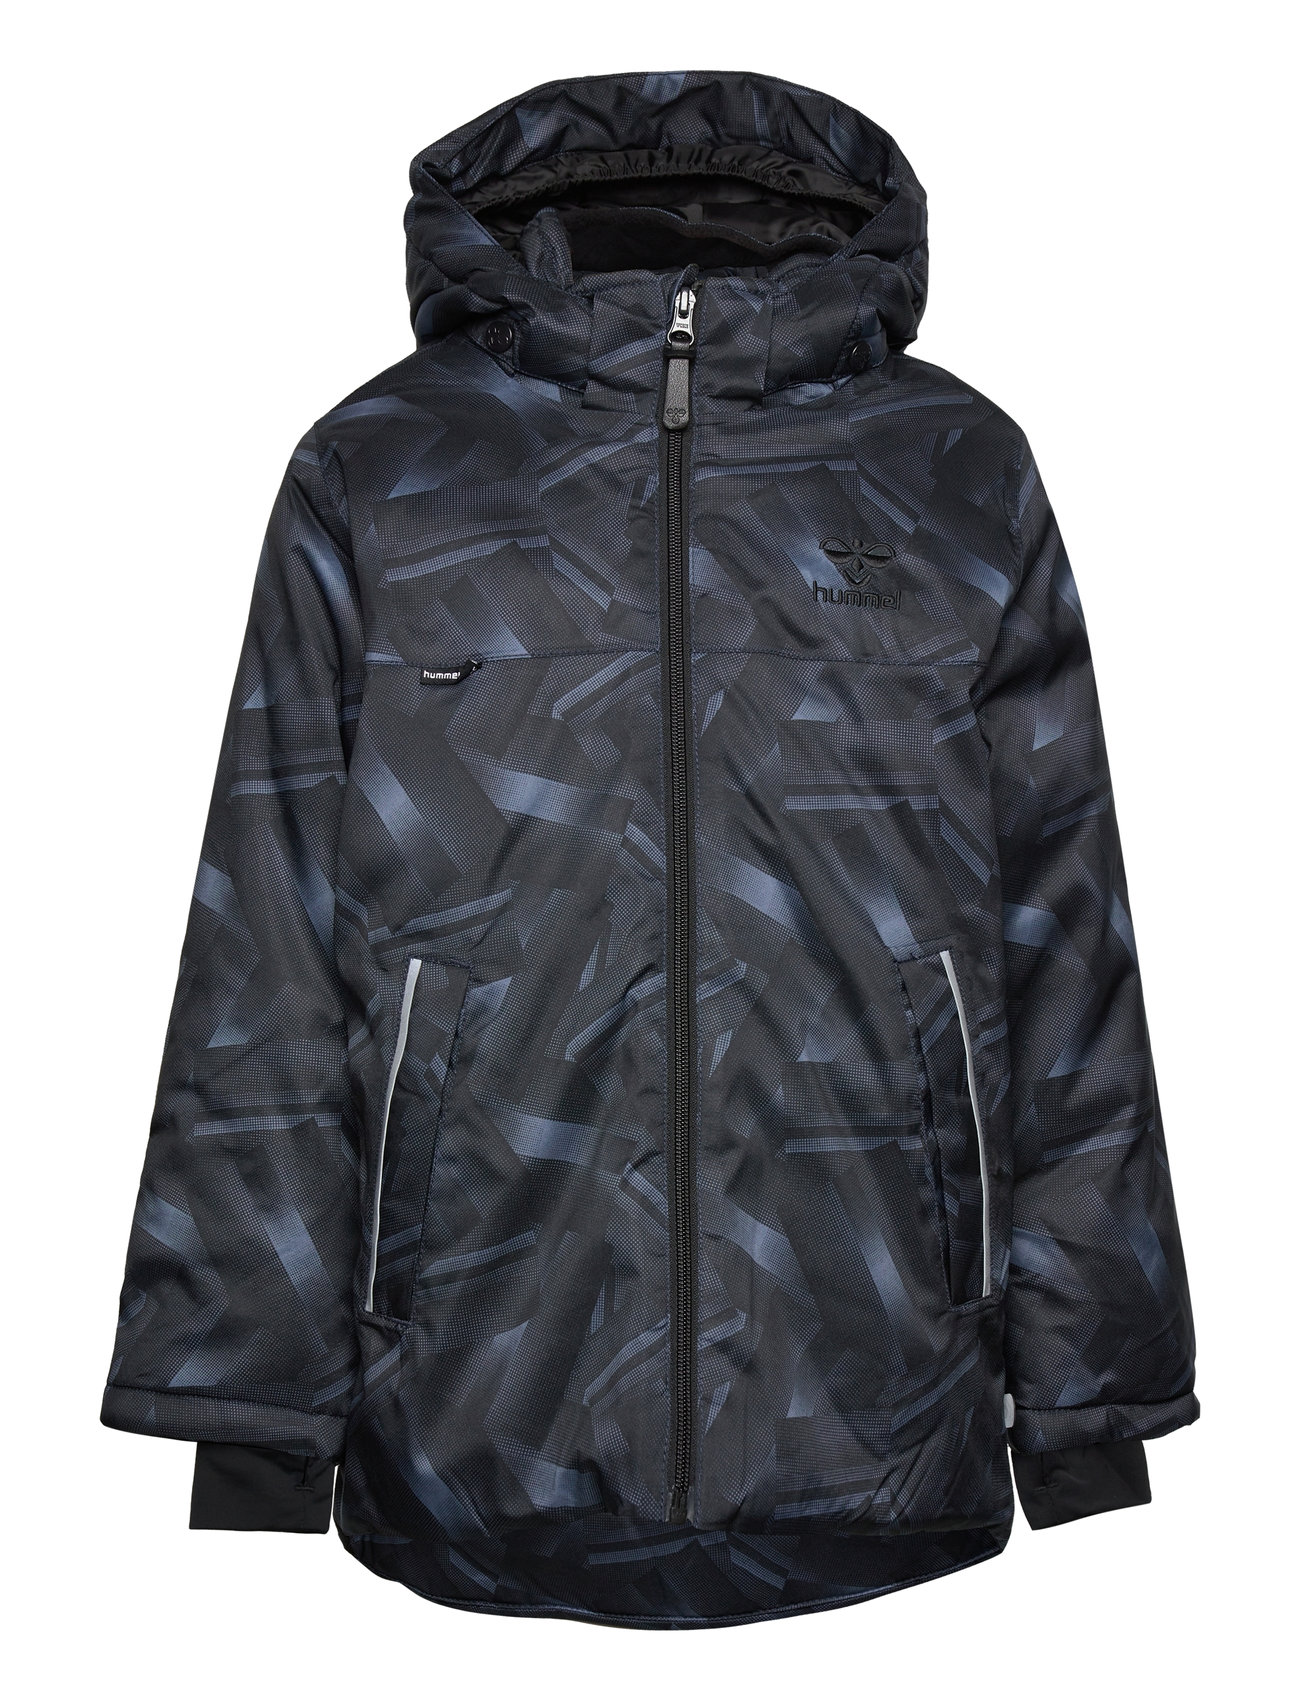 Hmllogan Tex Jacket Sport Rainwear Jackets Black Hummel